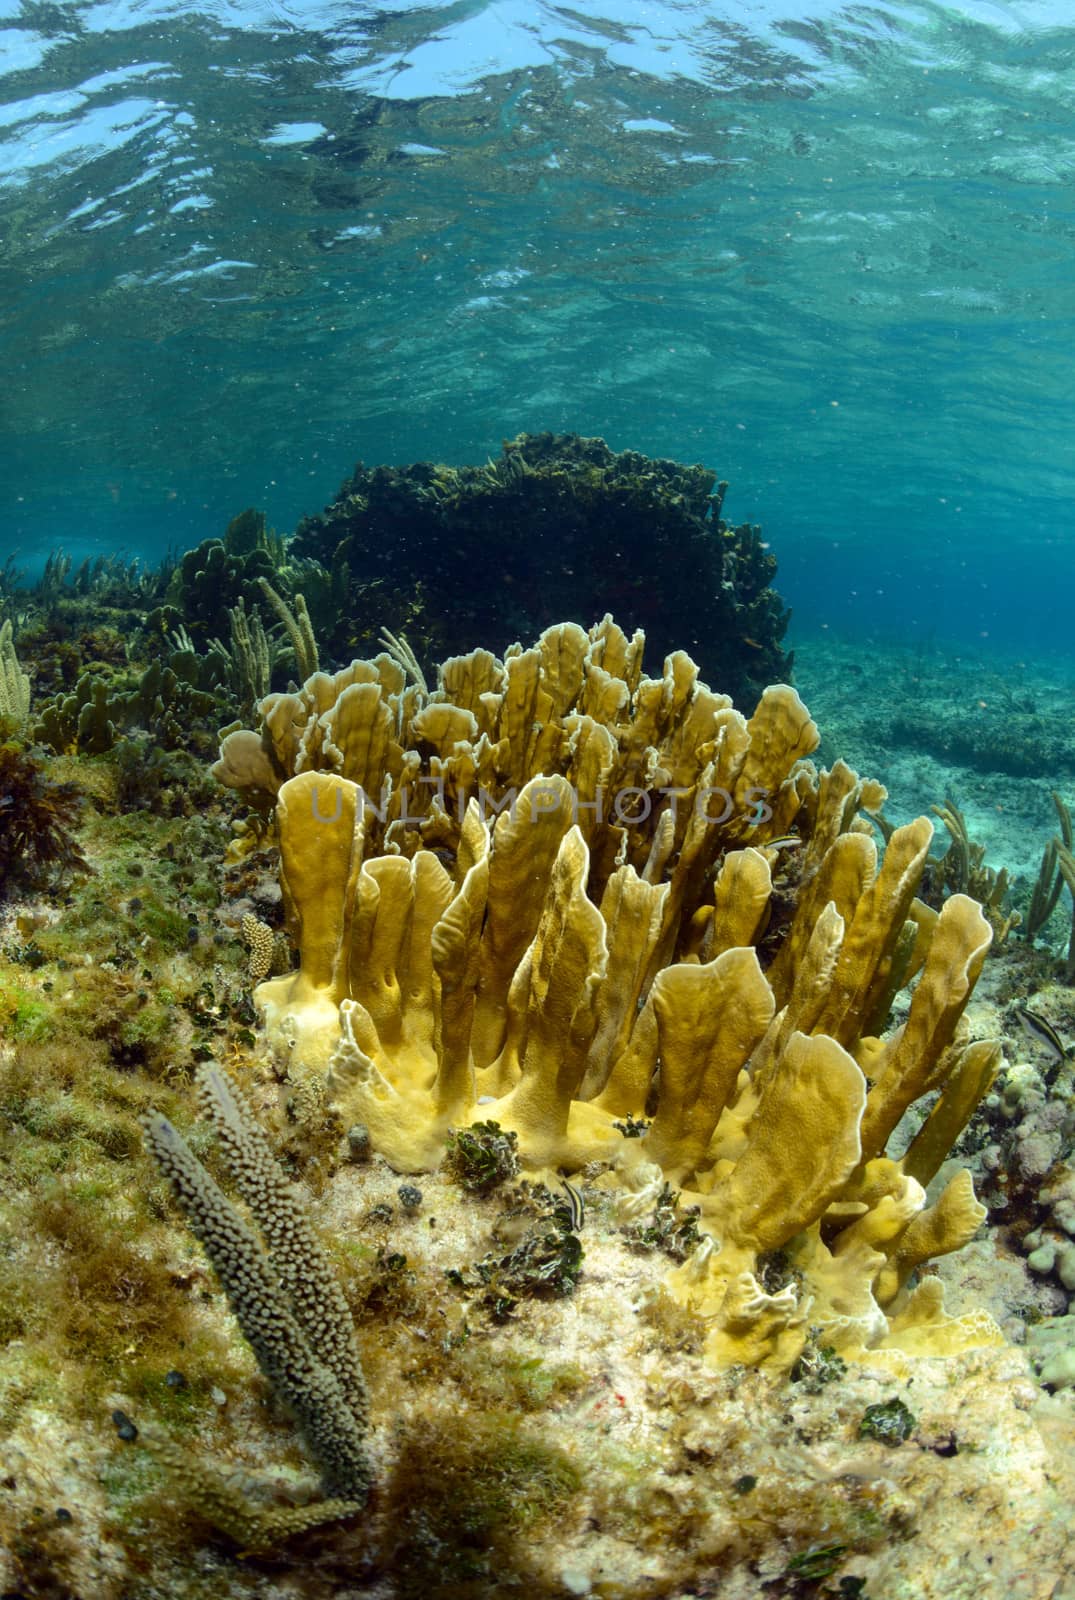 Underwater aquatic marine life and coral in ocean